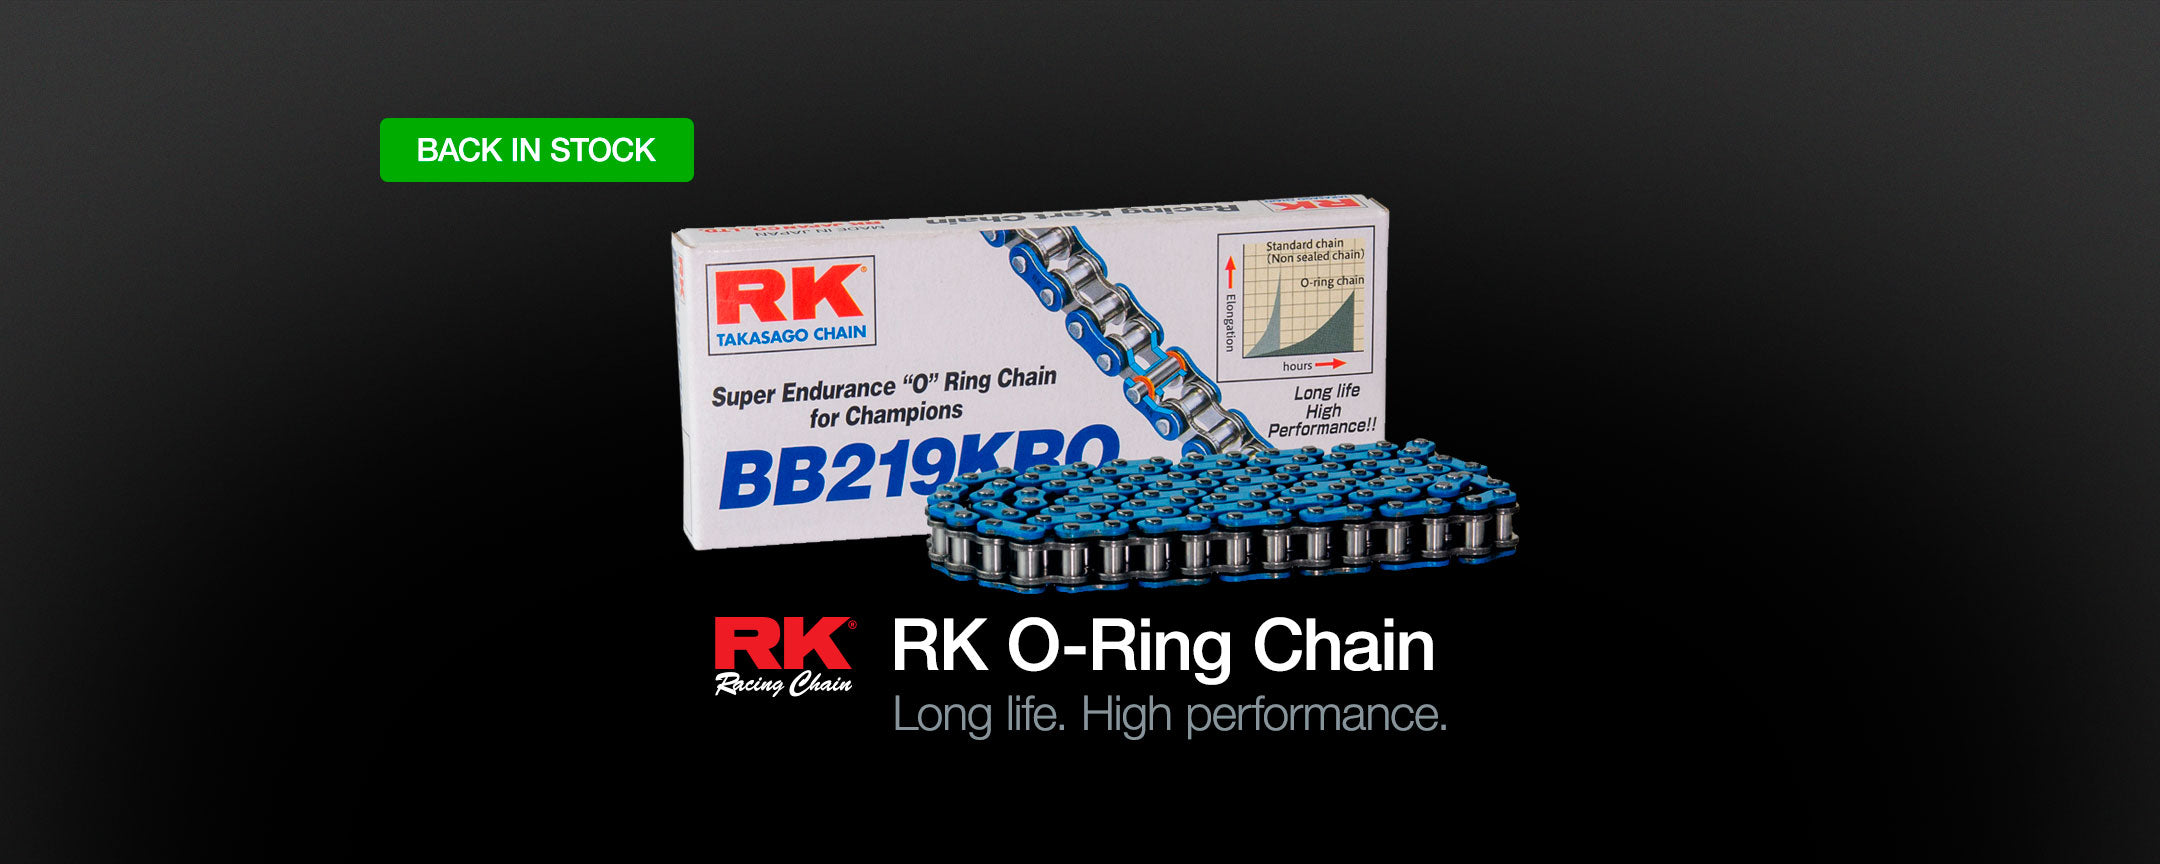 Go Kart Chain | RK Chain for Karting | RK O-Ring Chain | Kart Racing